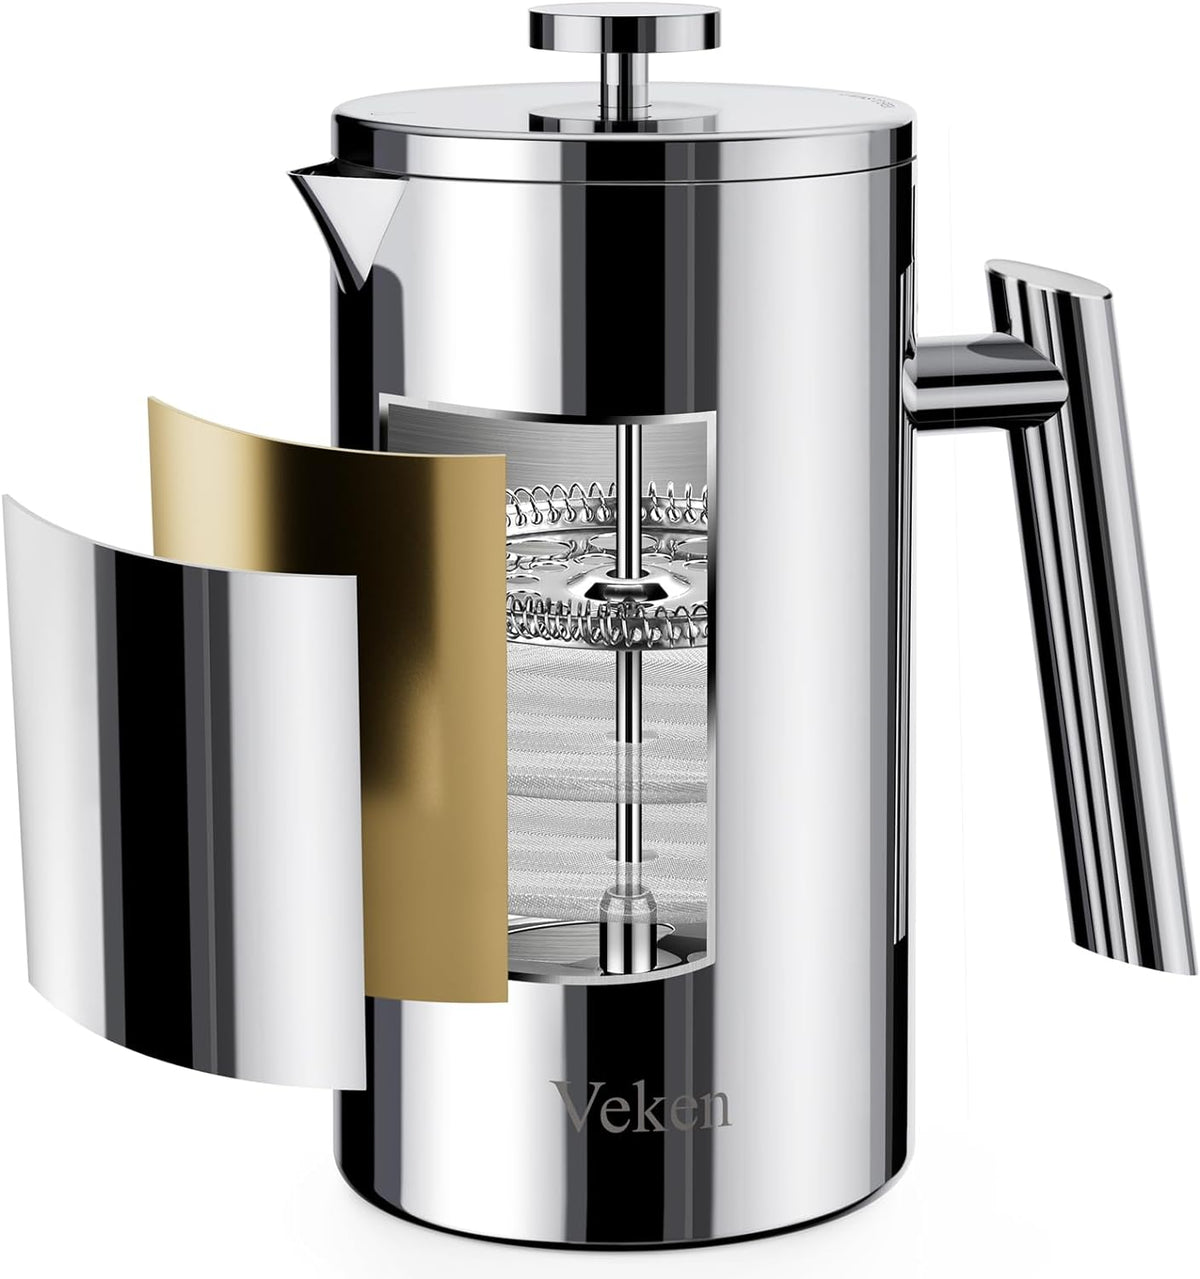 Veken French Press Plunger Coffee Tea Maker 34 Ounce 1 Liter-Silver